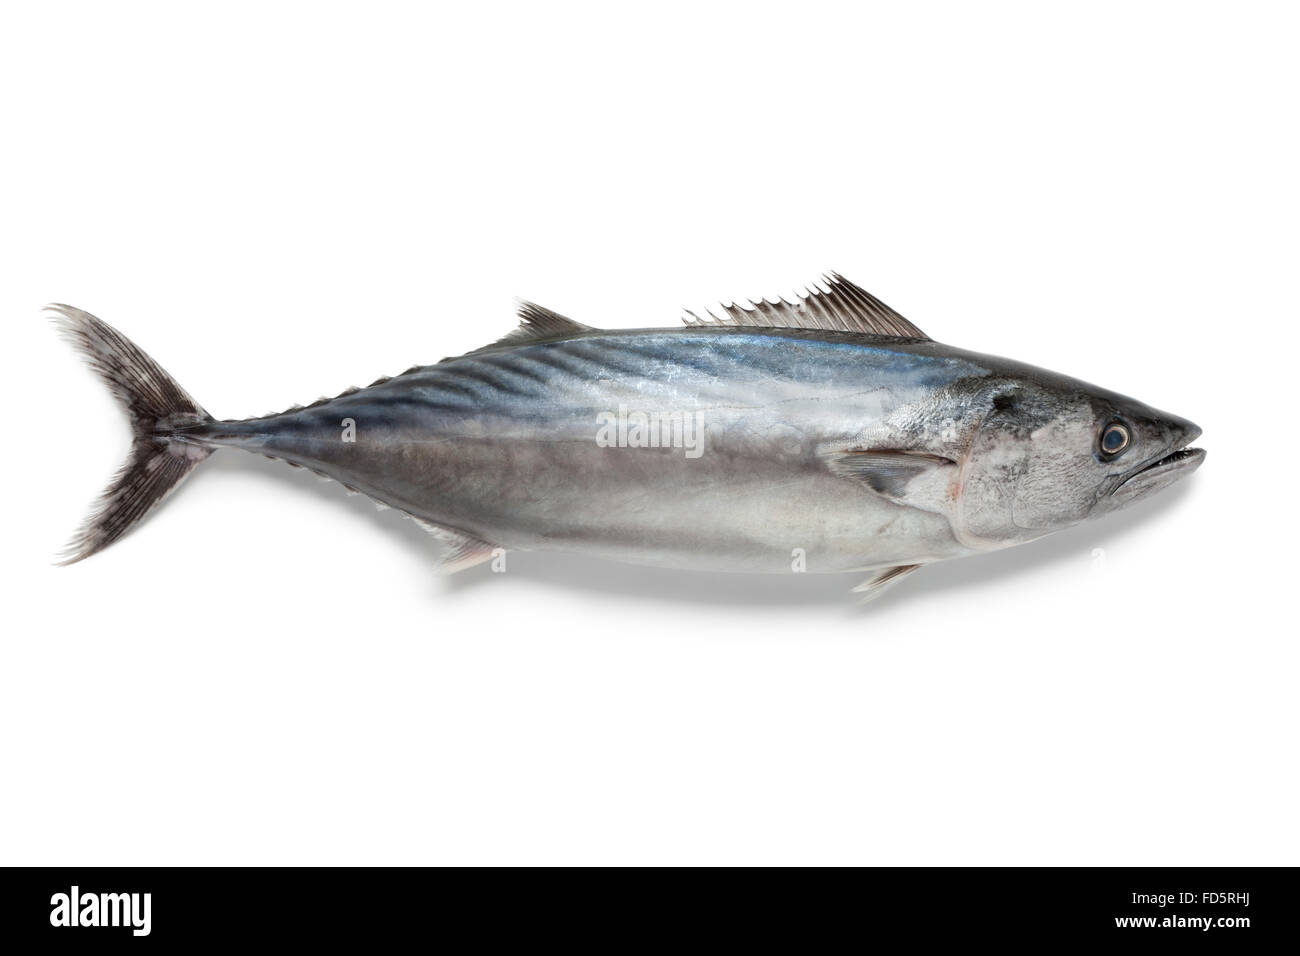 Singlre fresh bonito fish at white background Stock Photo